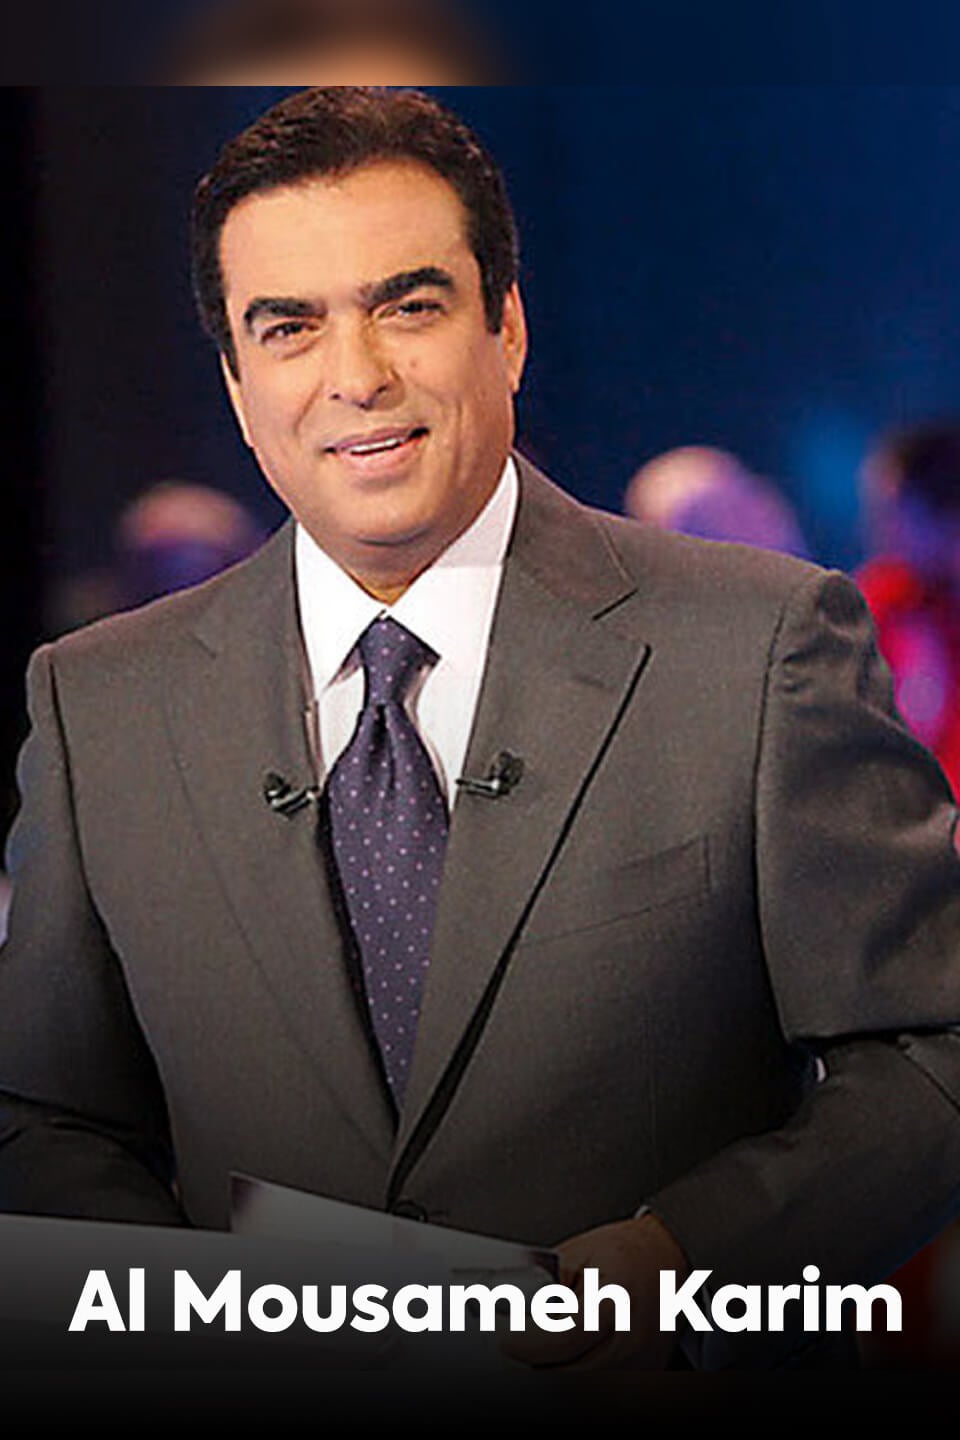 TV ratings for Al Mousameh Karim (المسامح كريم) in Turkey. OSN TV series